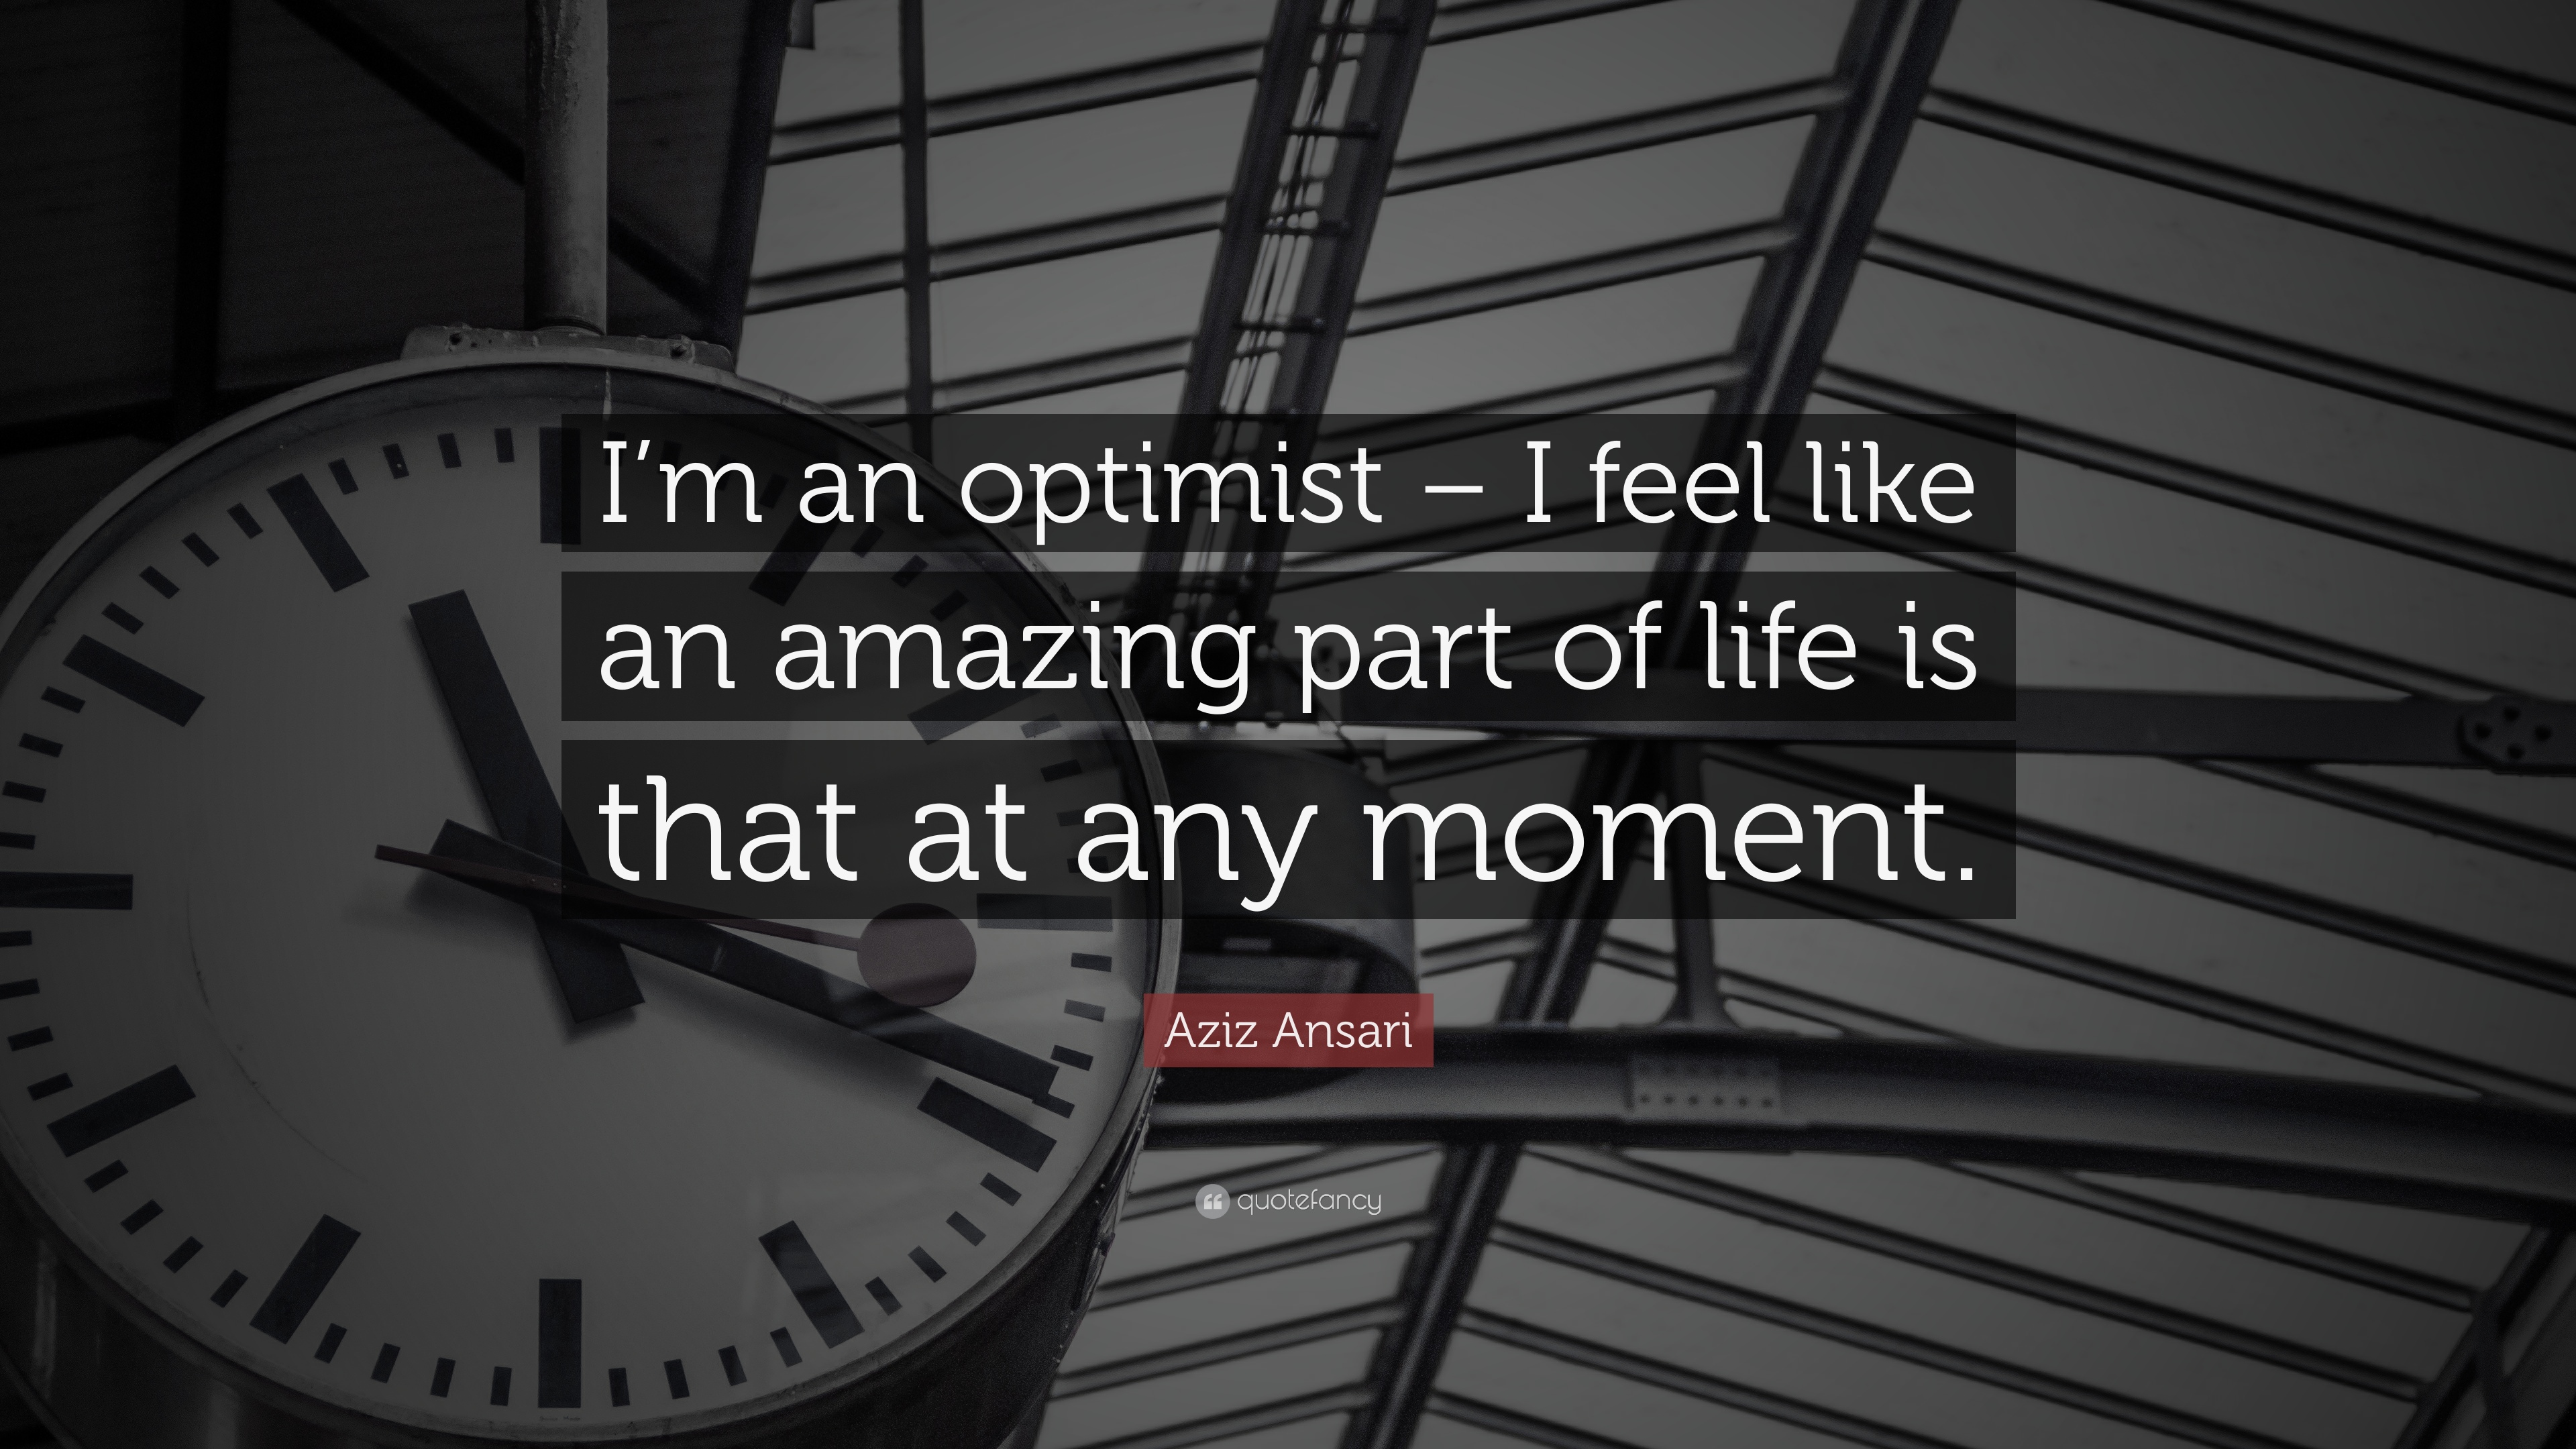 Aziz Ansari Quote: "I'm an optimist - I feel like an amazing part...